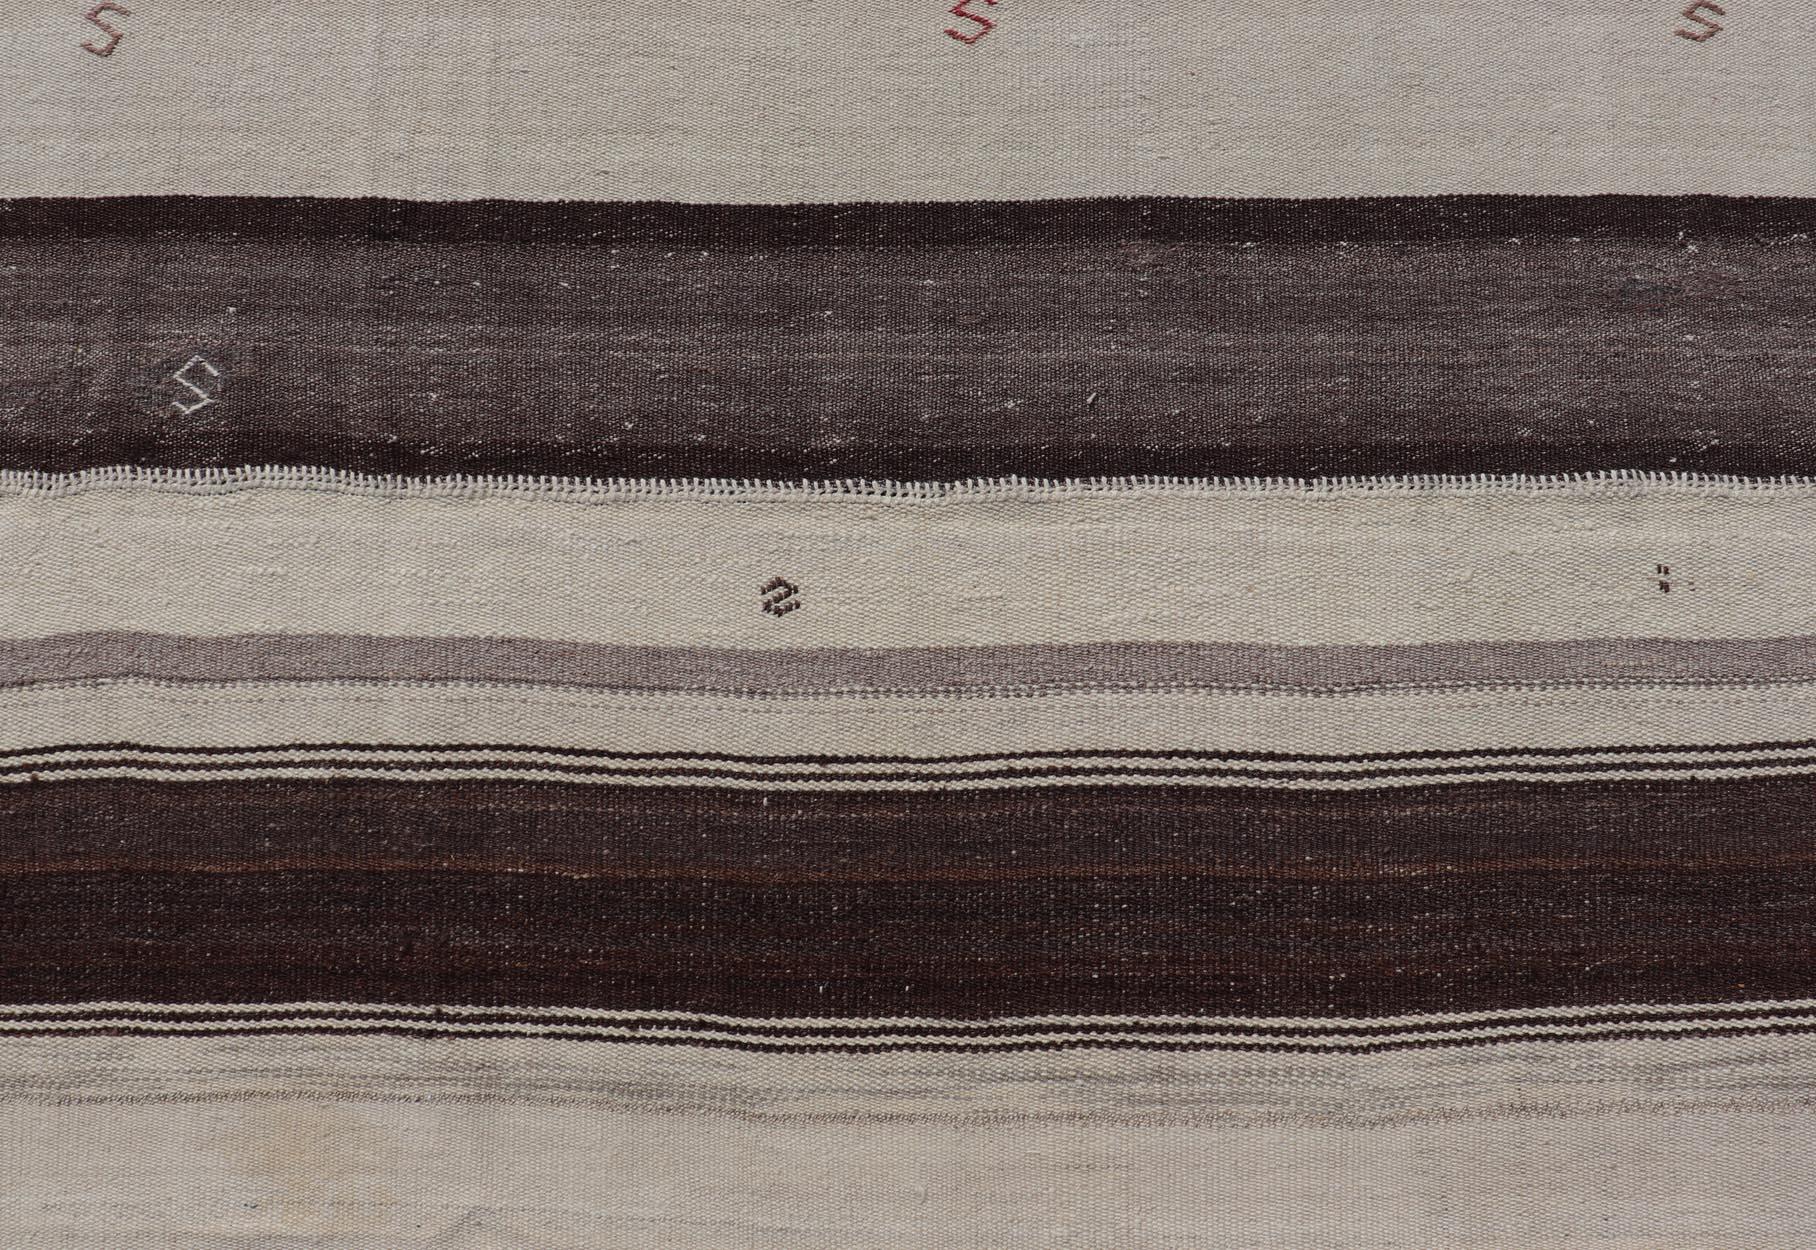 Striped Turkish Vintage Kilim Flat-Weave Rug in Brown, Mocha, and Ivory For Sale 1